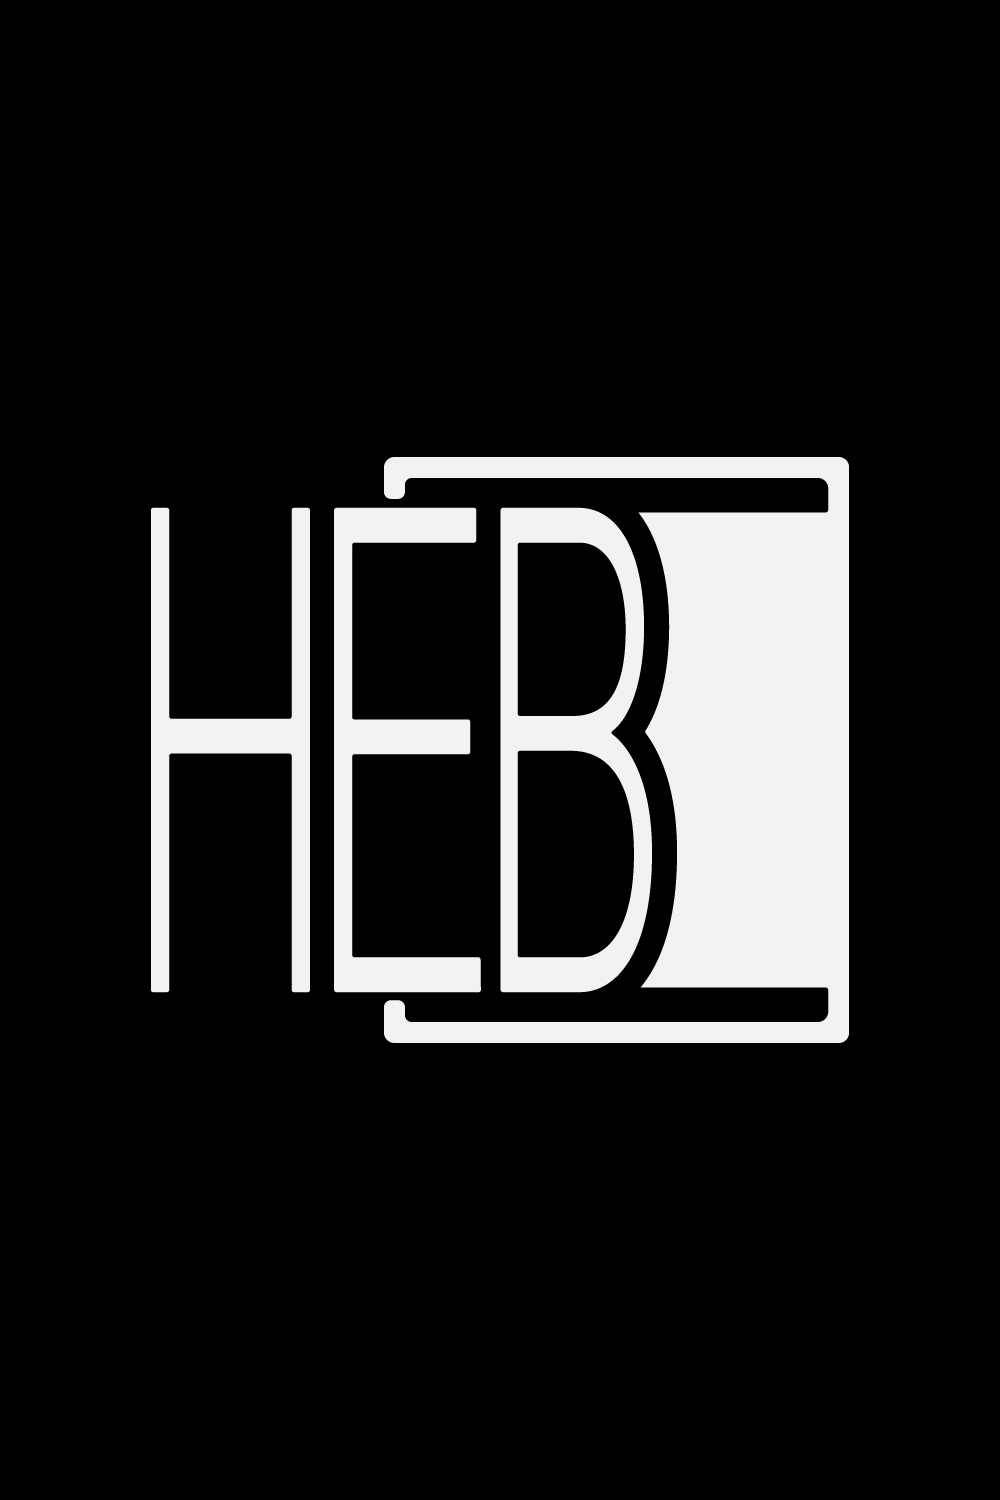 Initials HBE letters logo design Professional Simple , monogram, door, vector template icon BEH logo design pinterest preview image.